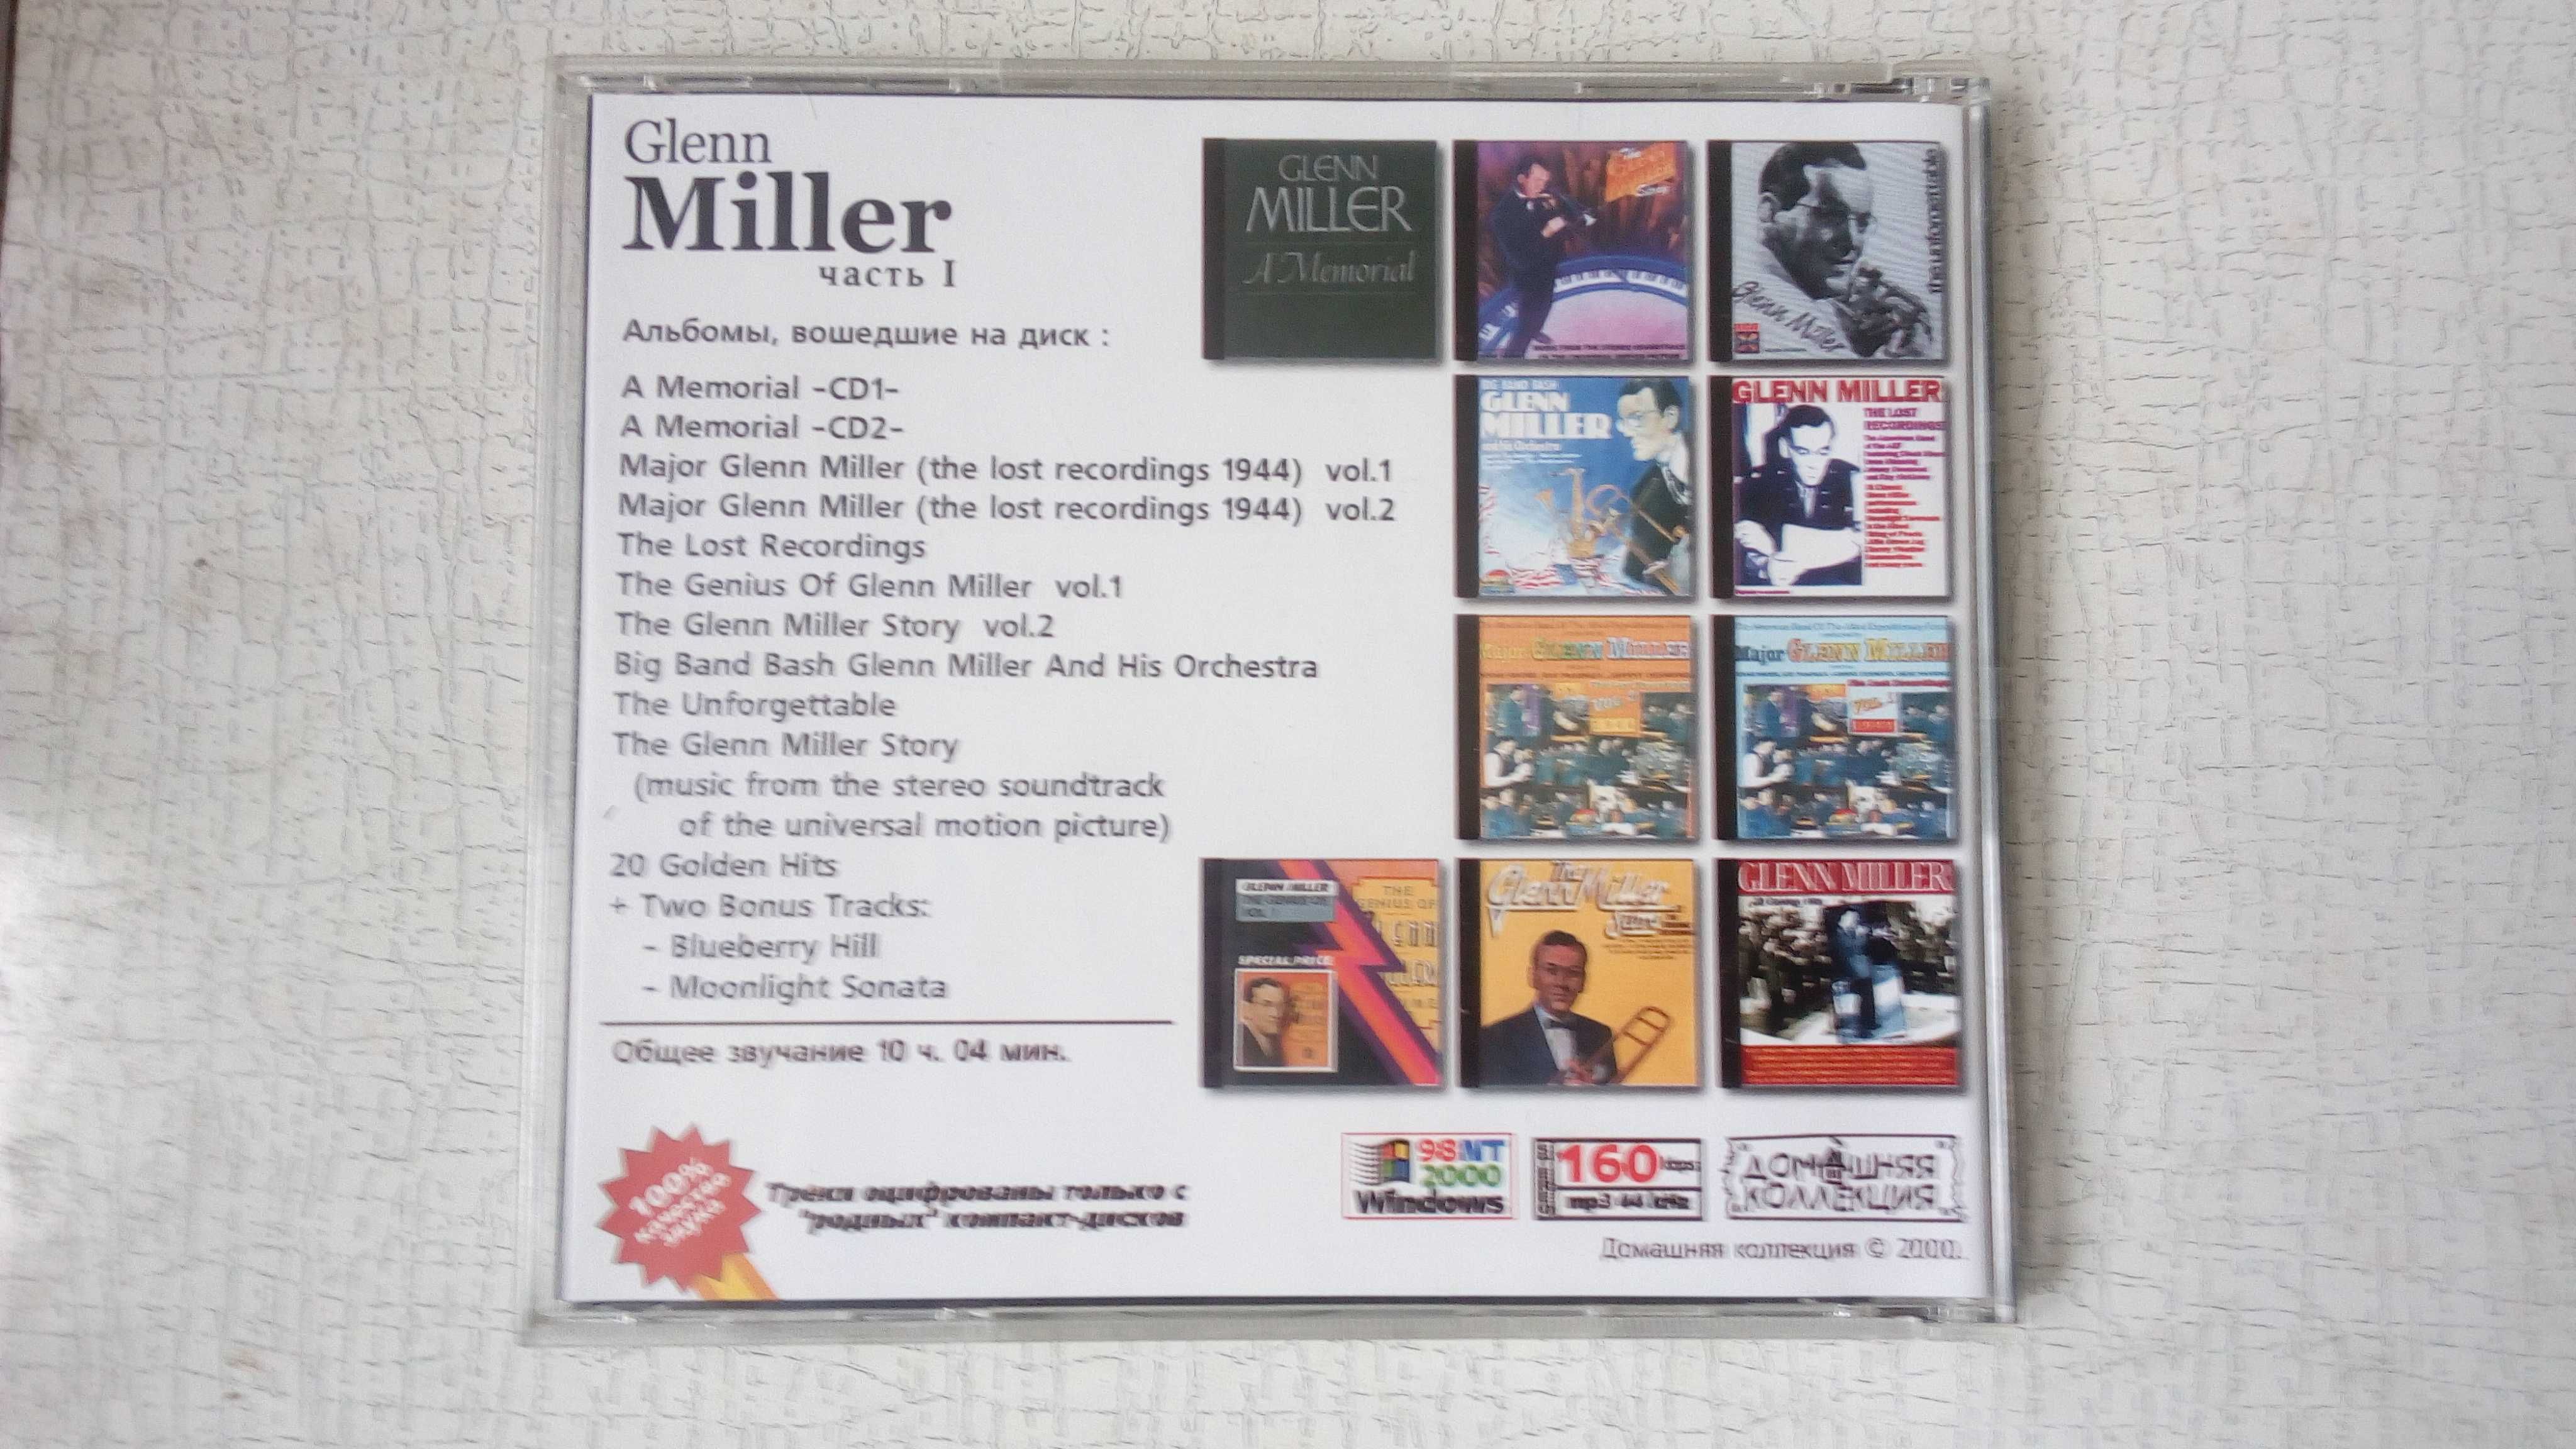 Glen Miller Jazz часть 1 MP-3 диск